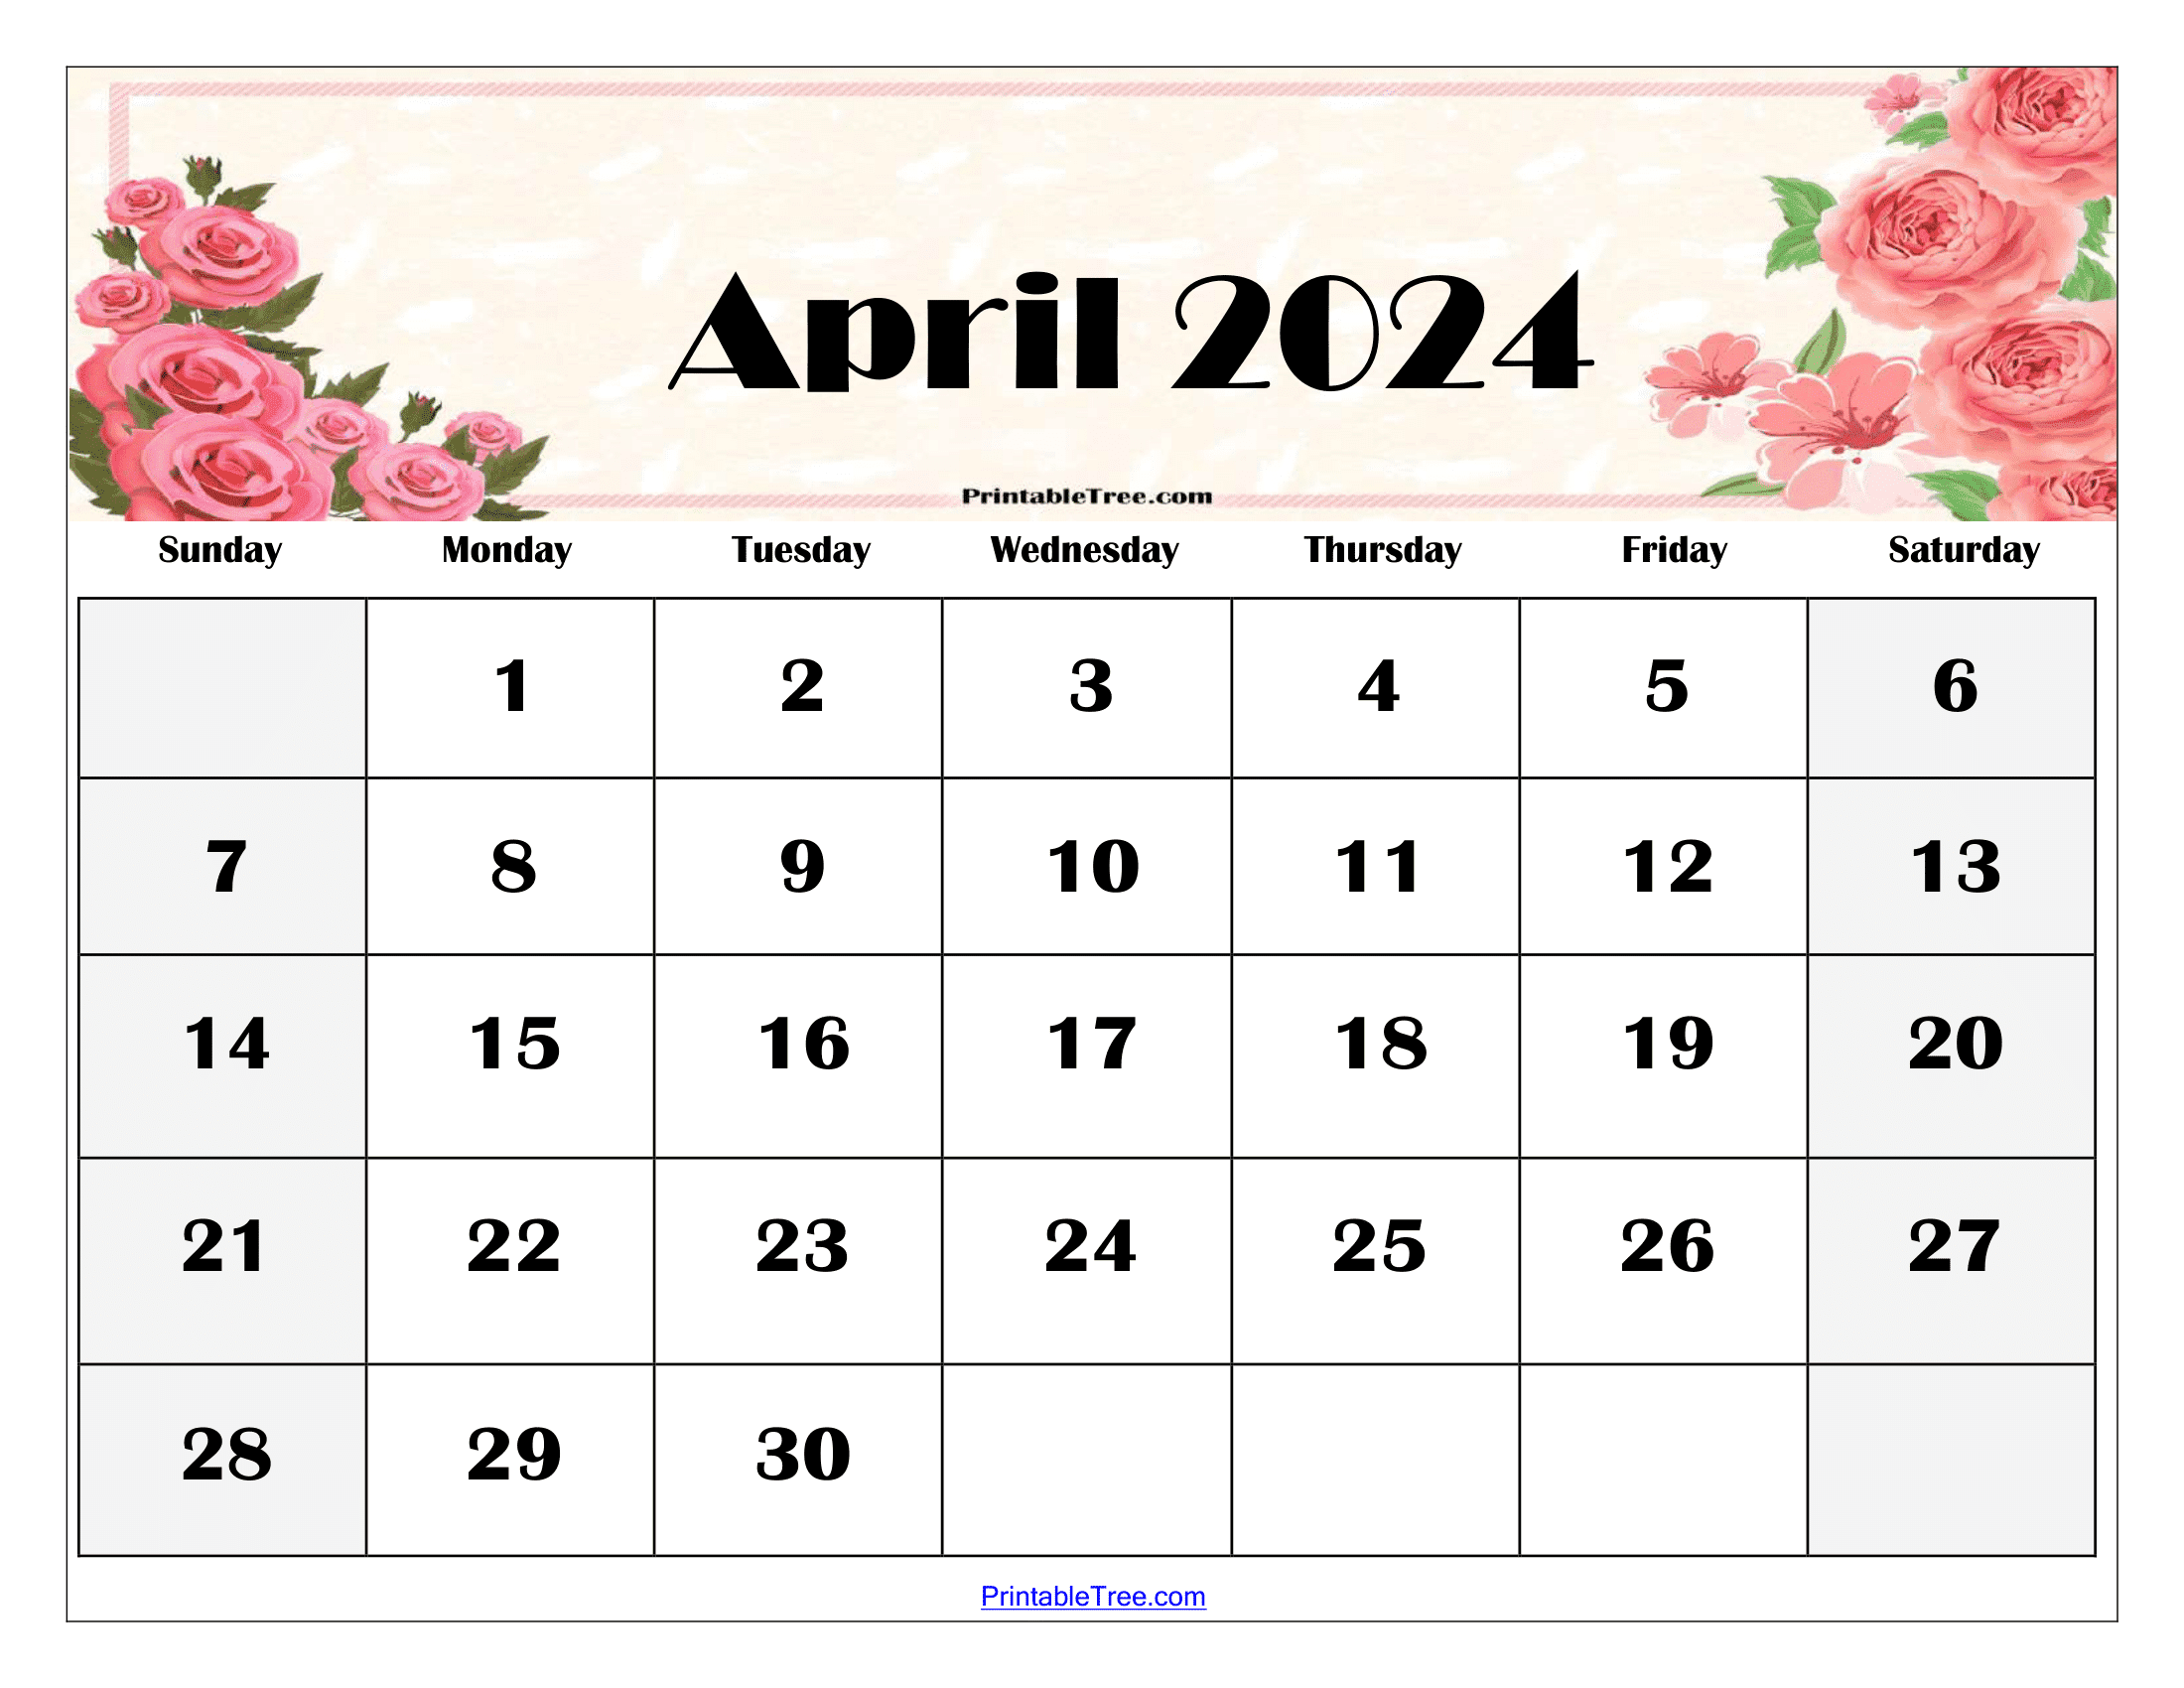 Printable April 2024 Calendar Planner Britt Colleen - Free Printable Calendar 2024 April May